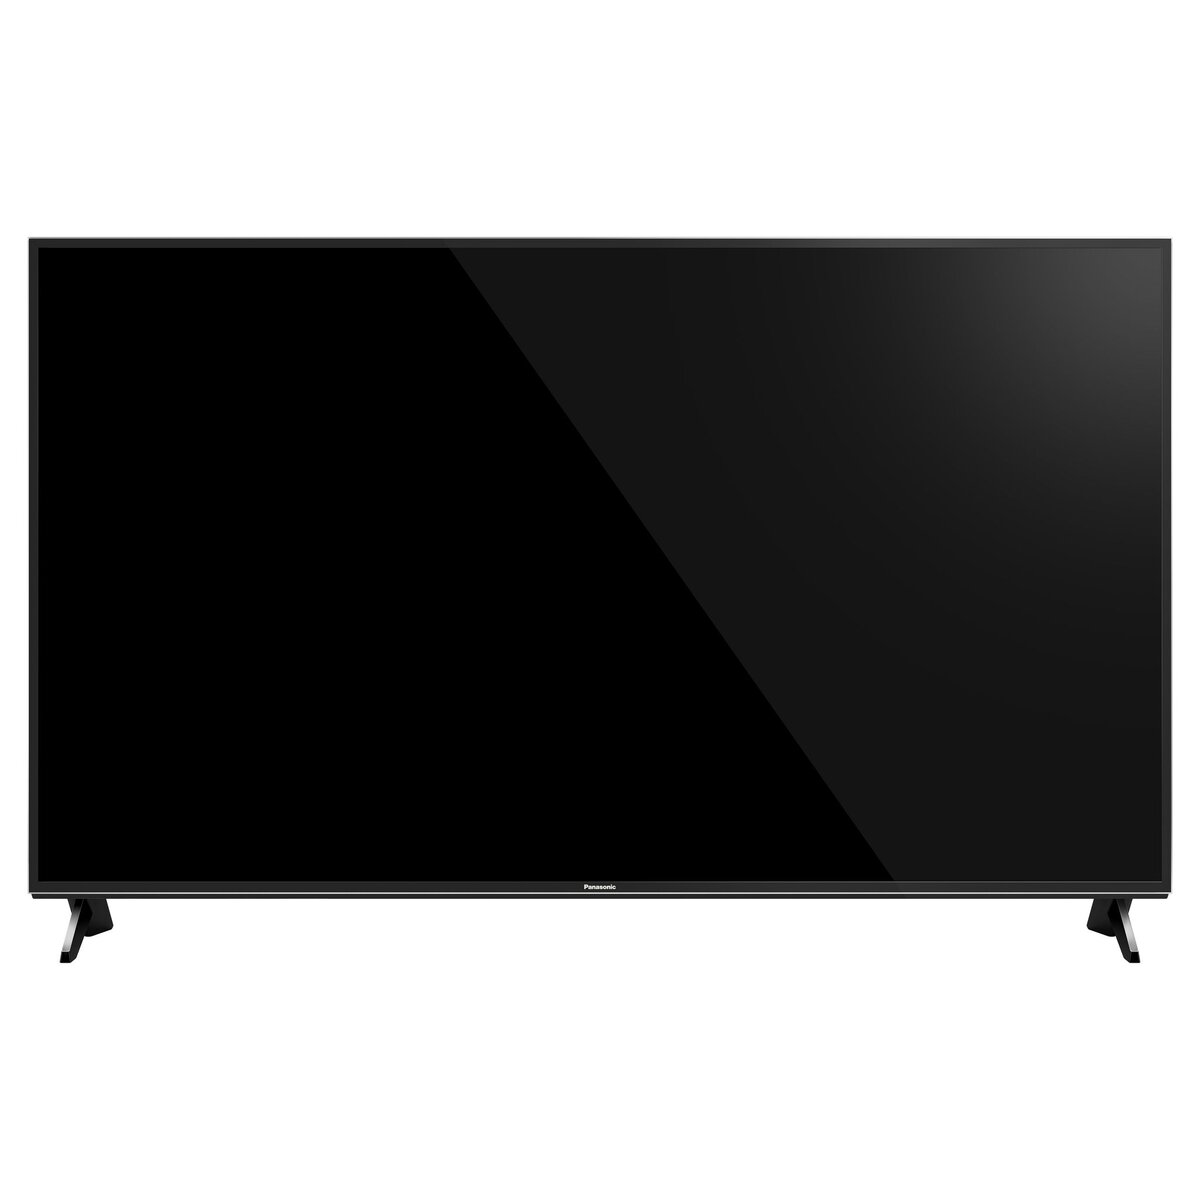 PANASONIC 65FX600 TV LCD LED 4K UHD 164 cm HDR Smart TV